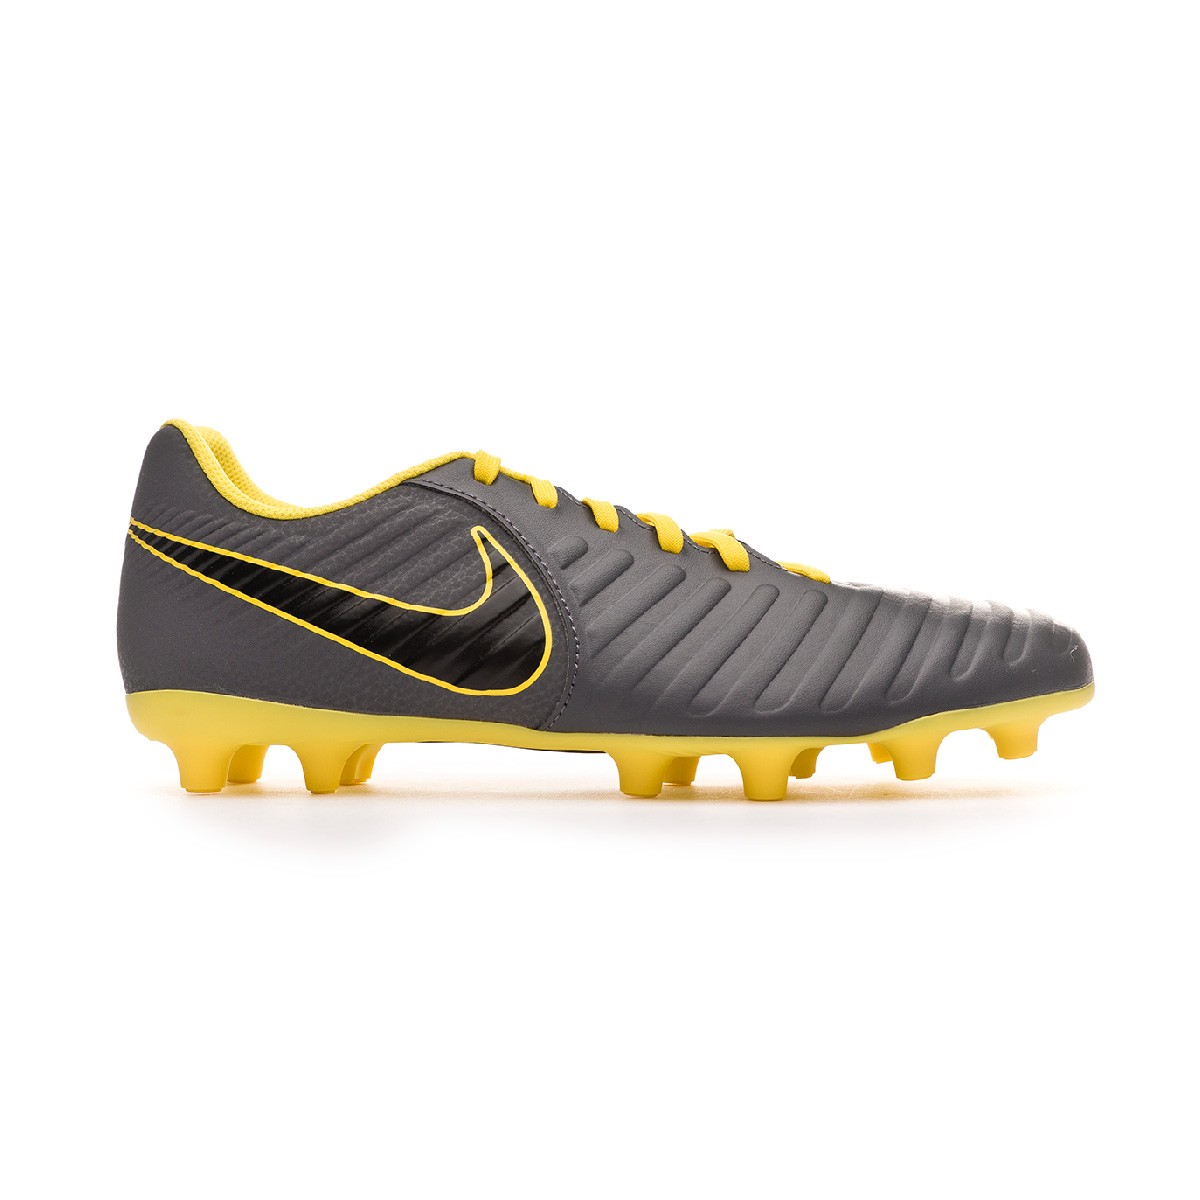 Bota de fútbol Nike Tiempo Legend VII Club MG Dark grey-Black-Optical  yellow - Tienda de fútbol Fútbol Emotion